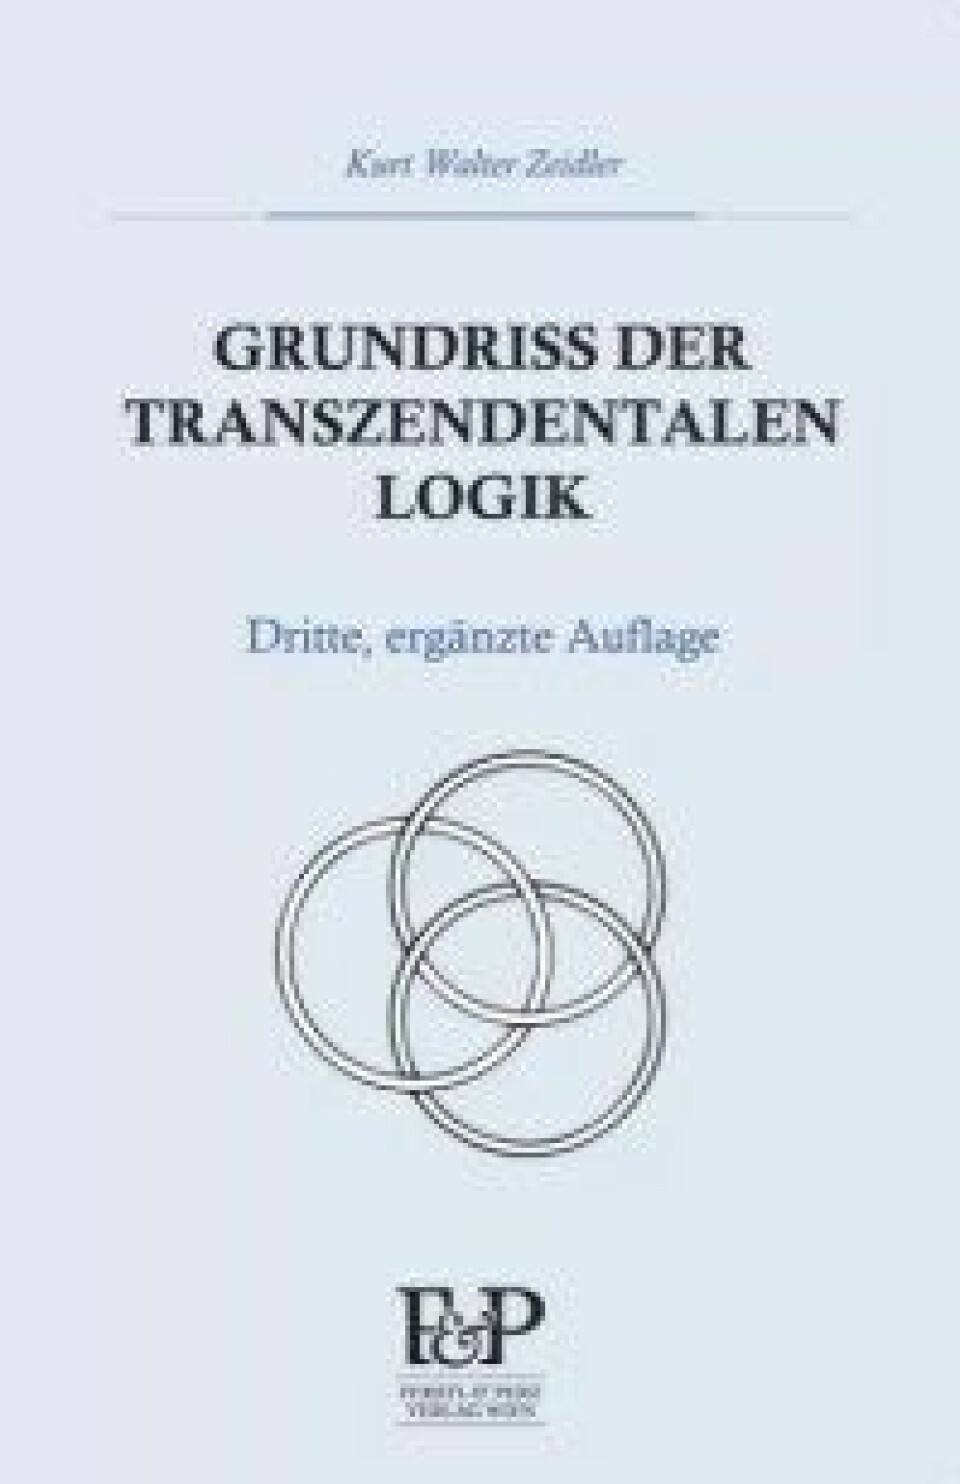 Grundriss der Transzendentalen Logik (3. utgave) av Kurt Walter Zeidler. Wien Ferstl & Perz, 2017.